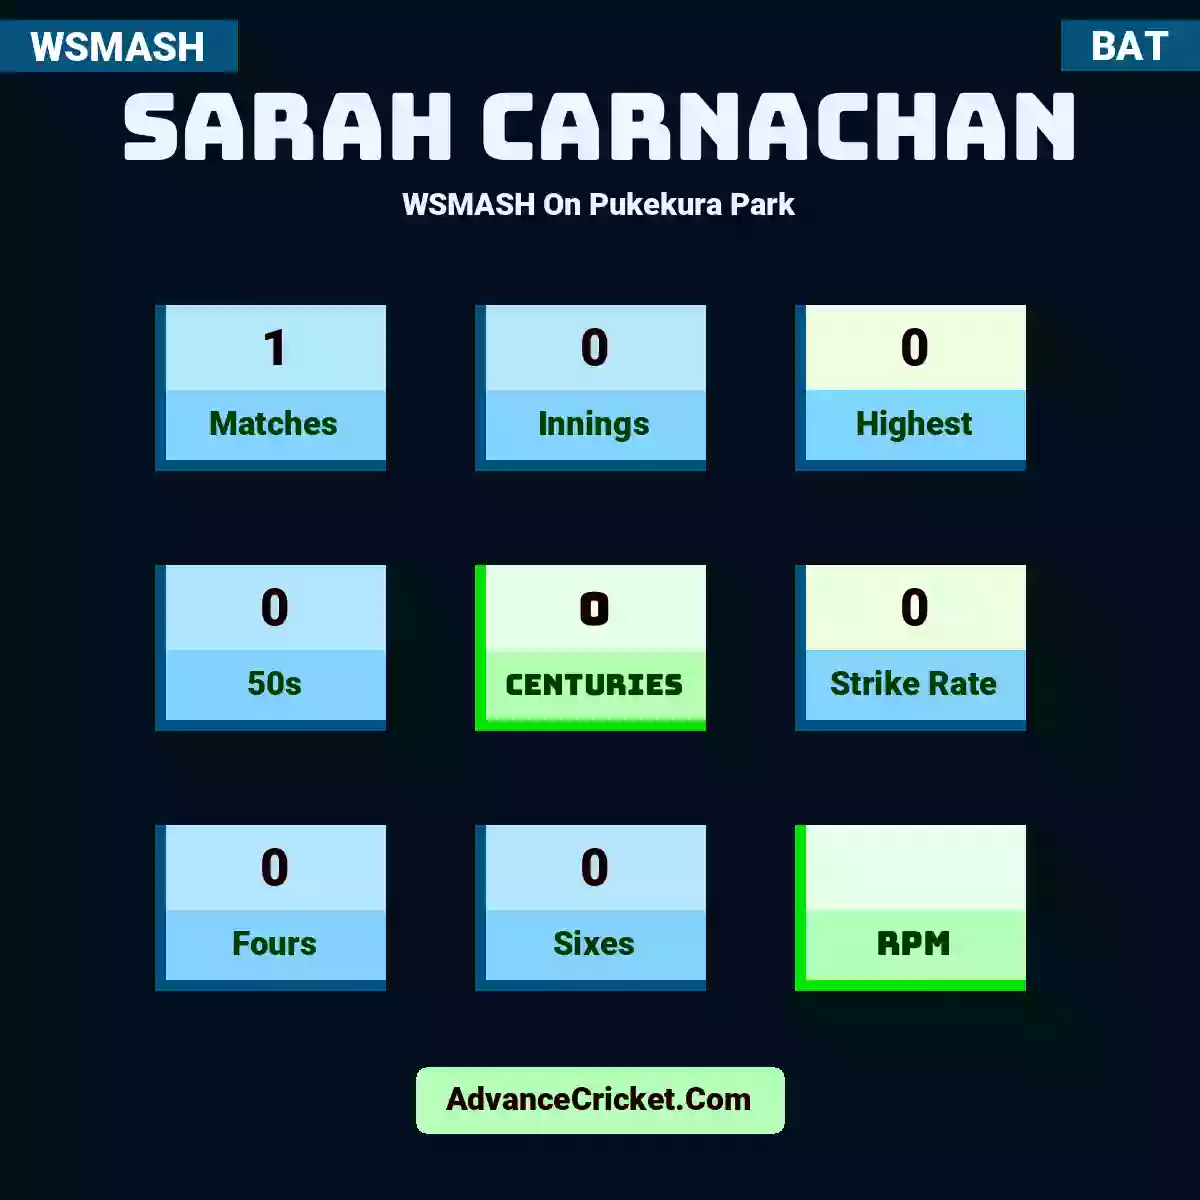 Sarah Carnachan WSMASH  On Pukekura Park, Sarah Carnachan played 1 matches, scored 0 runs as highest, 0 half-centuries, and 0 centuries, with a strike rate of 0. S.Carnachan hit 0 fours and 0 sixes.